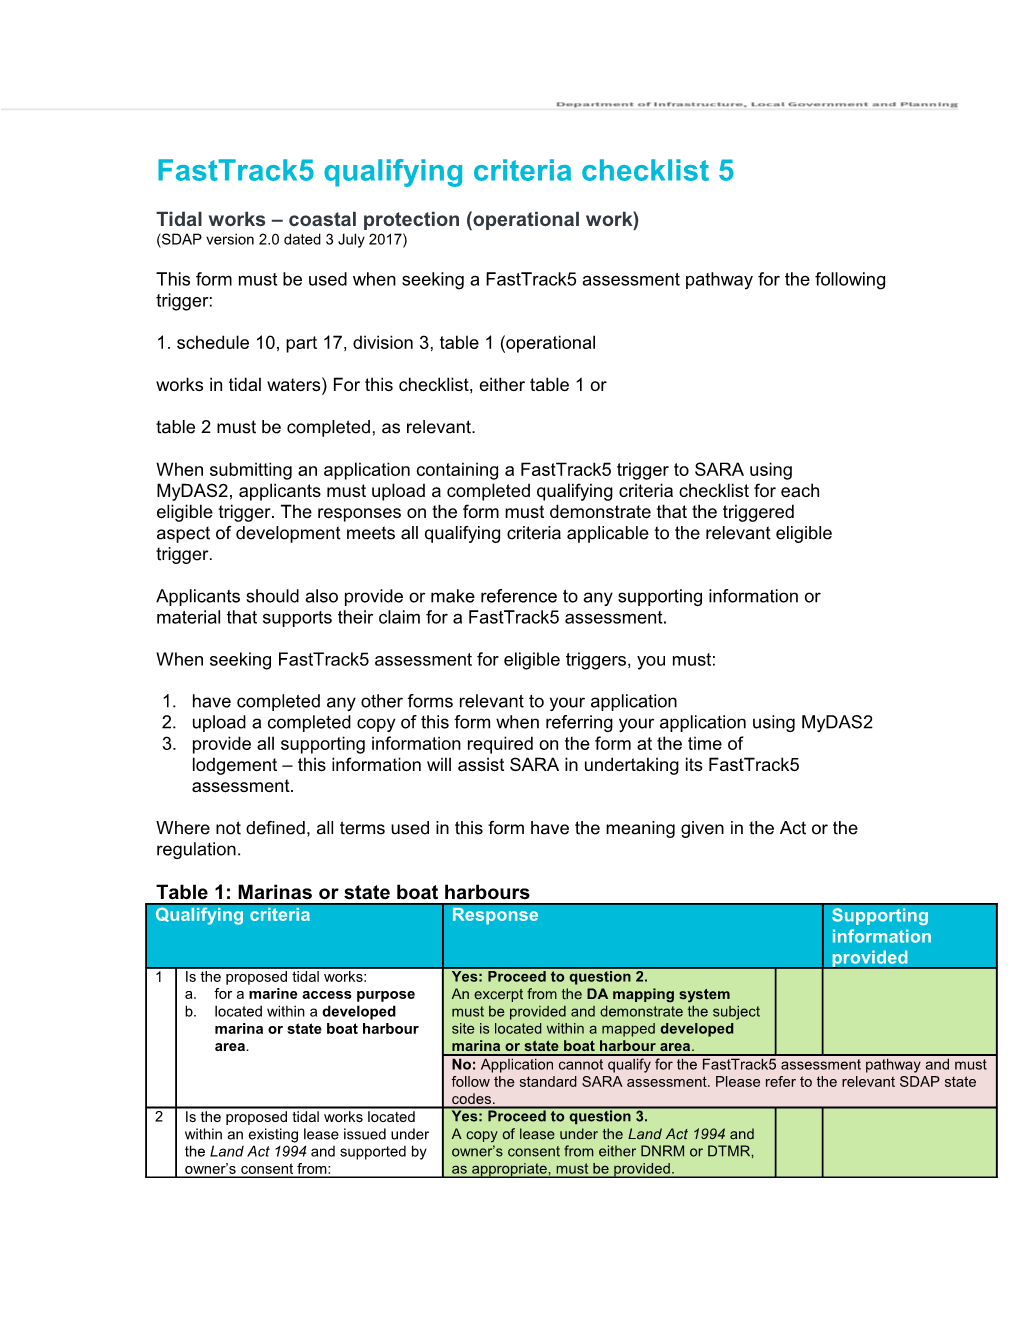 Fastrack5 Qualifying Criteria Checklist 5